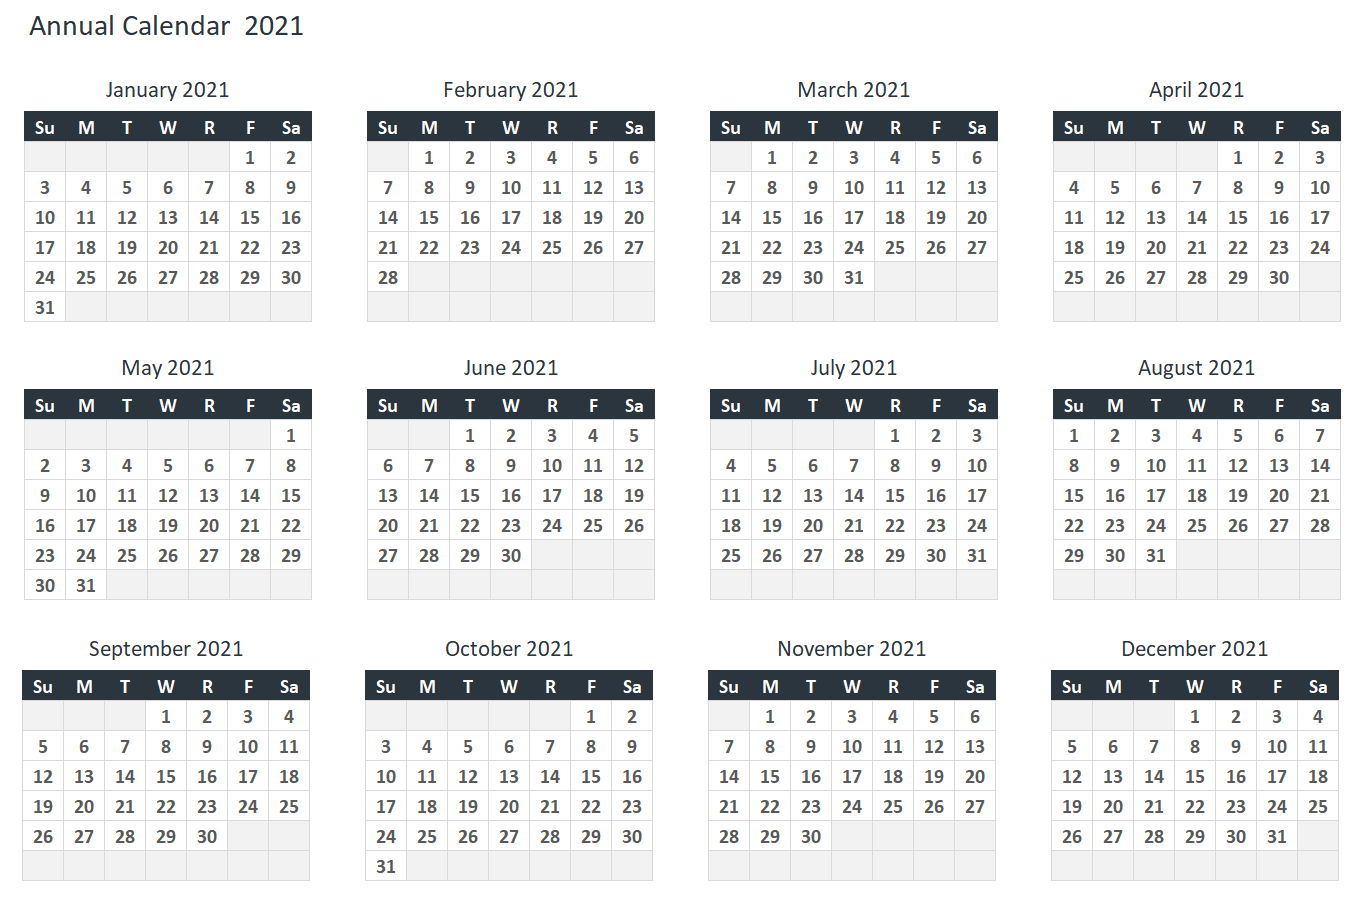 Annual Calendar Templates prntbl concejomunicipaldechinu gov co